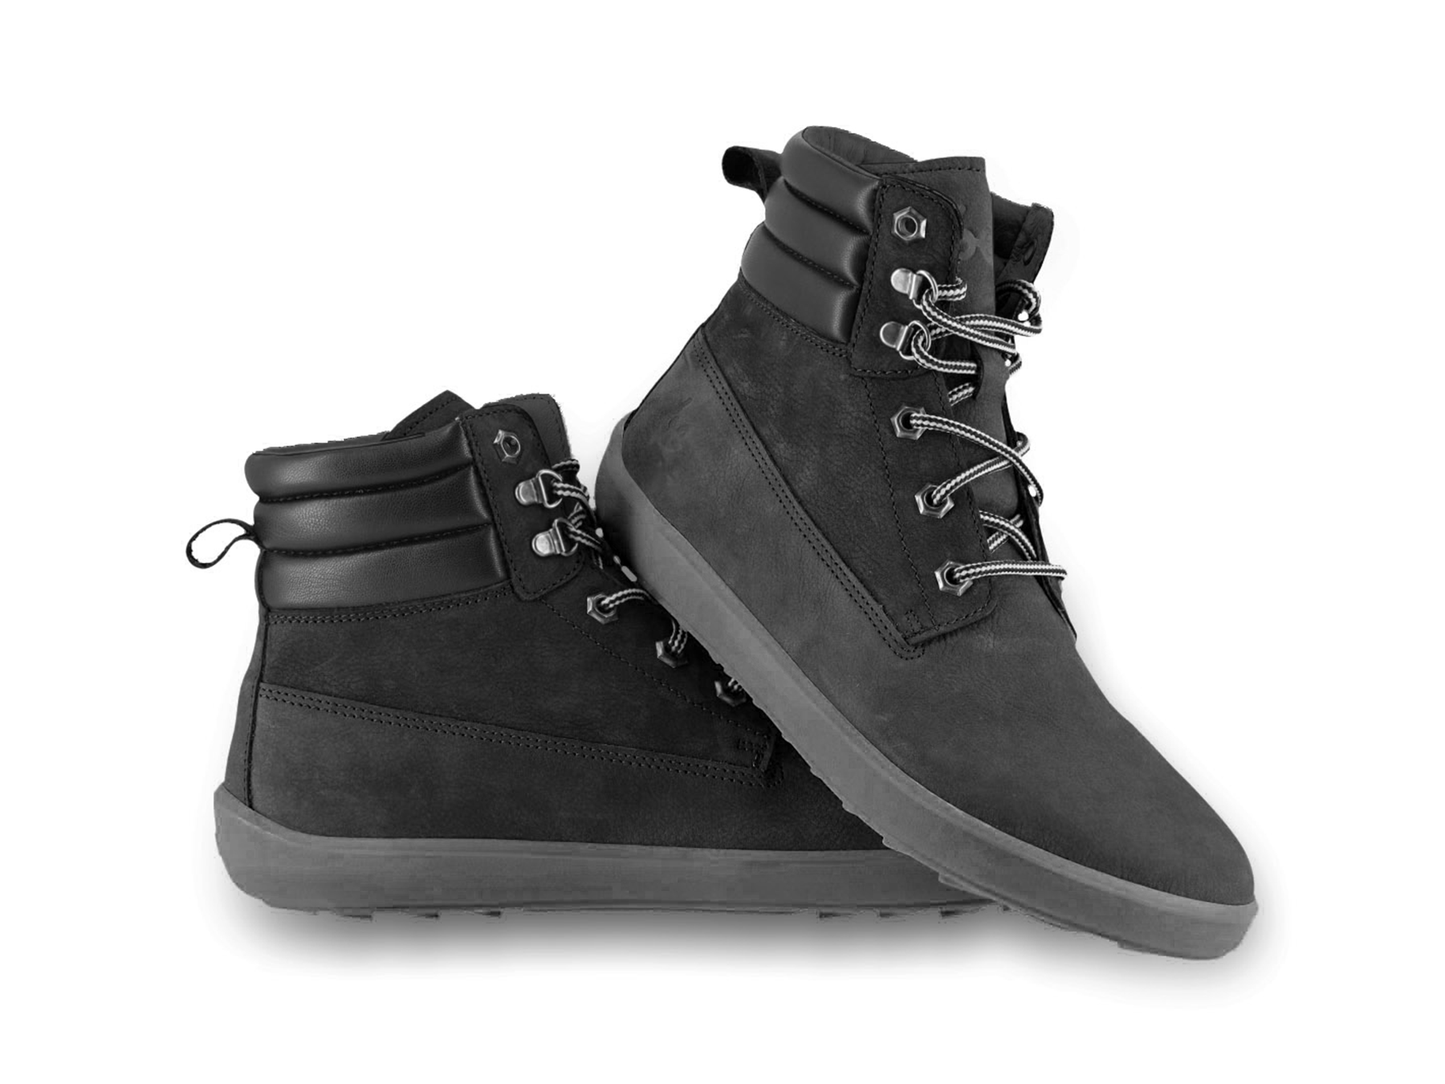 Be Lenka Nevada Neo Barefoot Boots - All Black